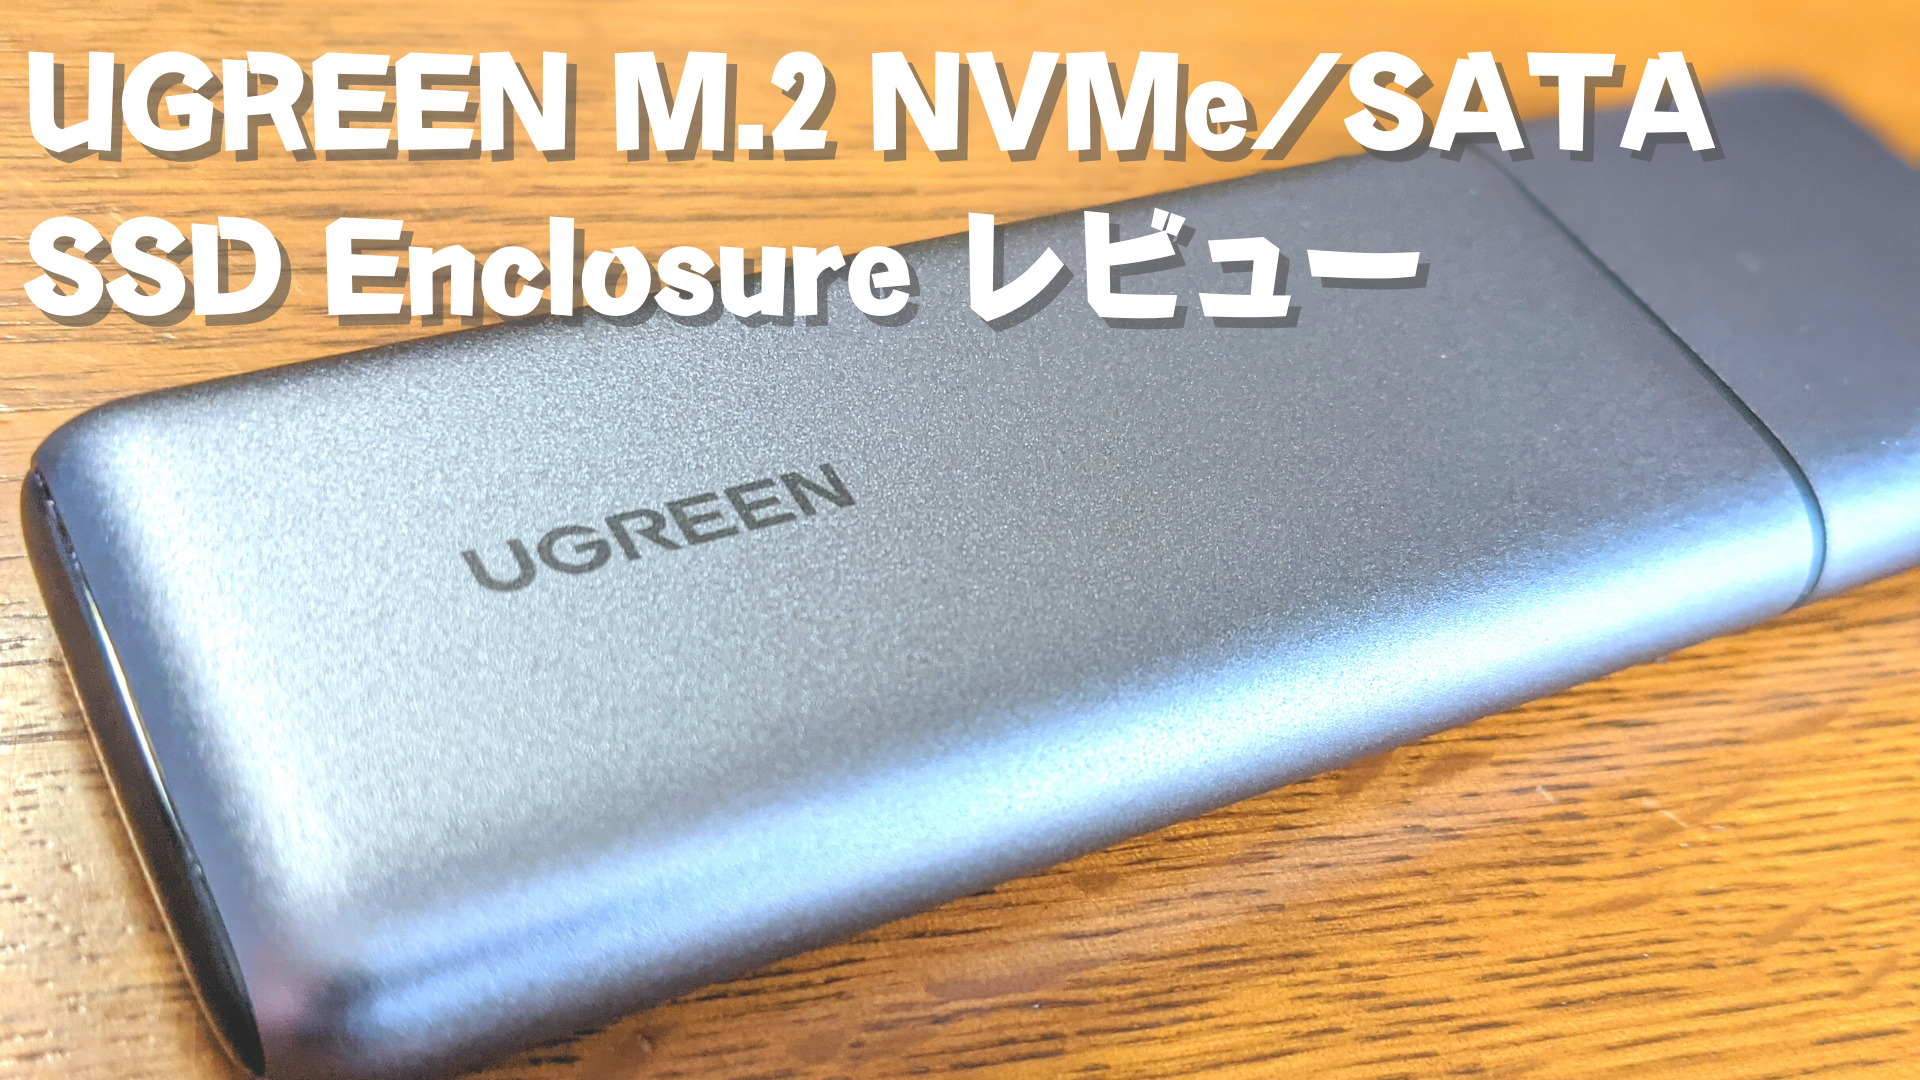 UGREEN M.2 NVMeSATA SSD Enclosure レビュー-title